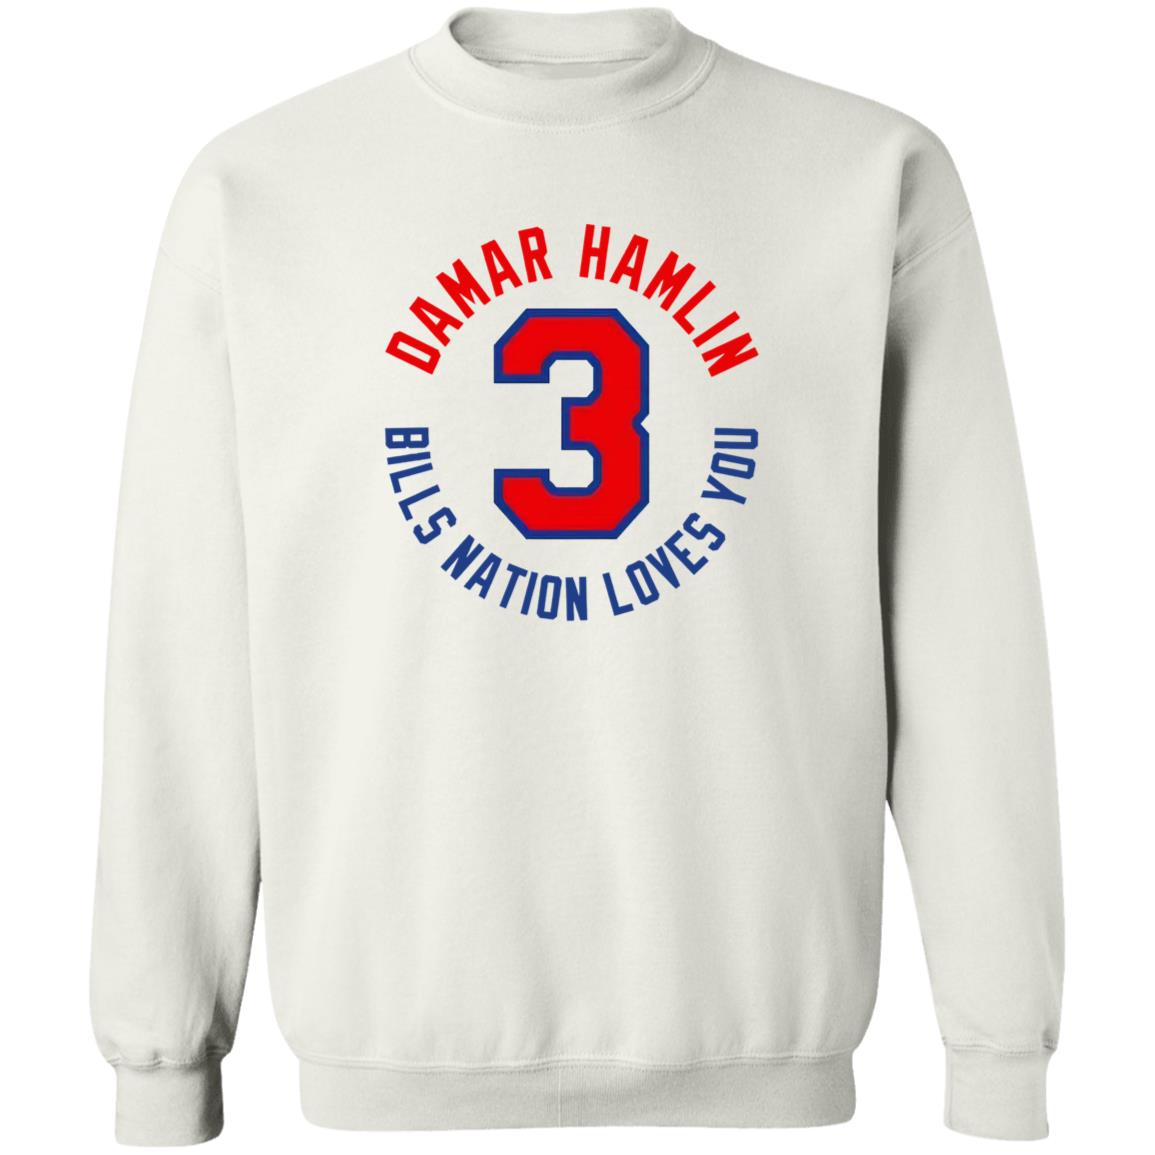 Damar Hamlin 3 Bills Nation Loves You Sweatshirt